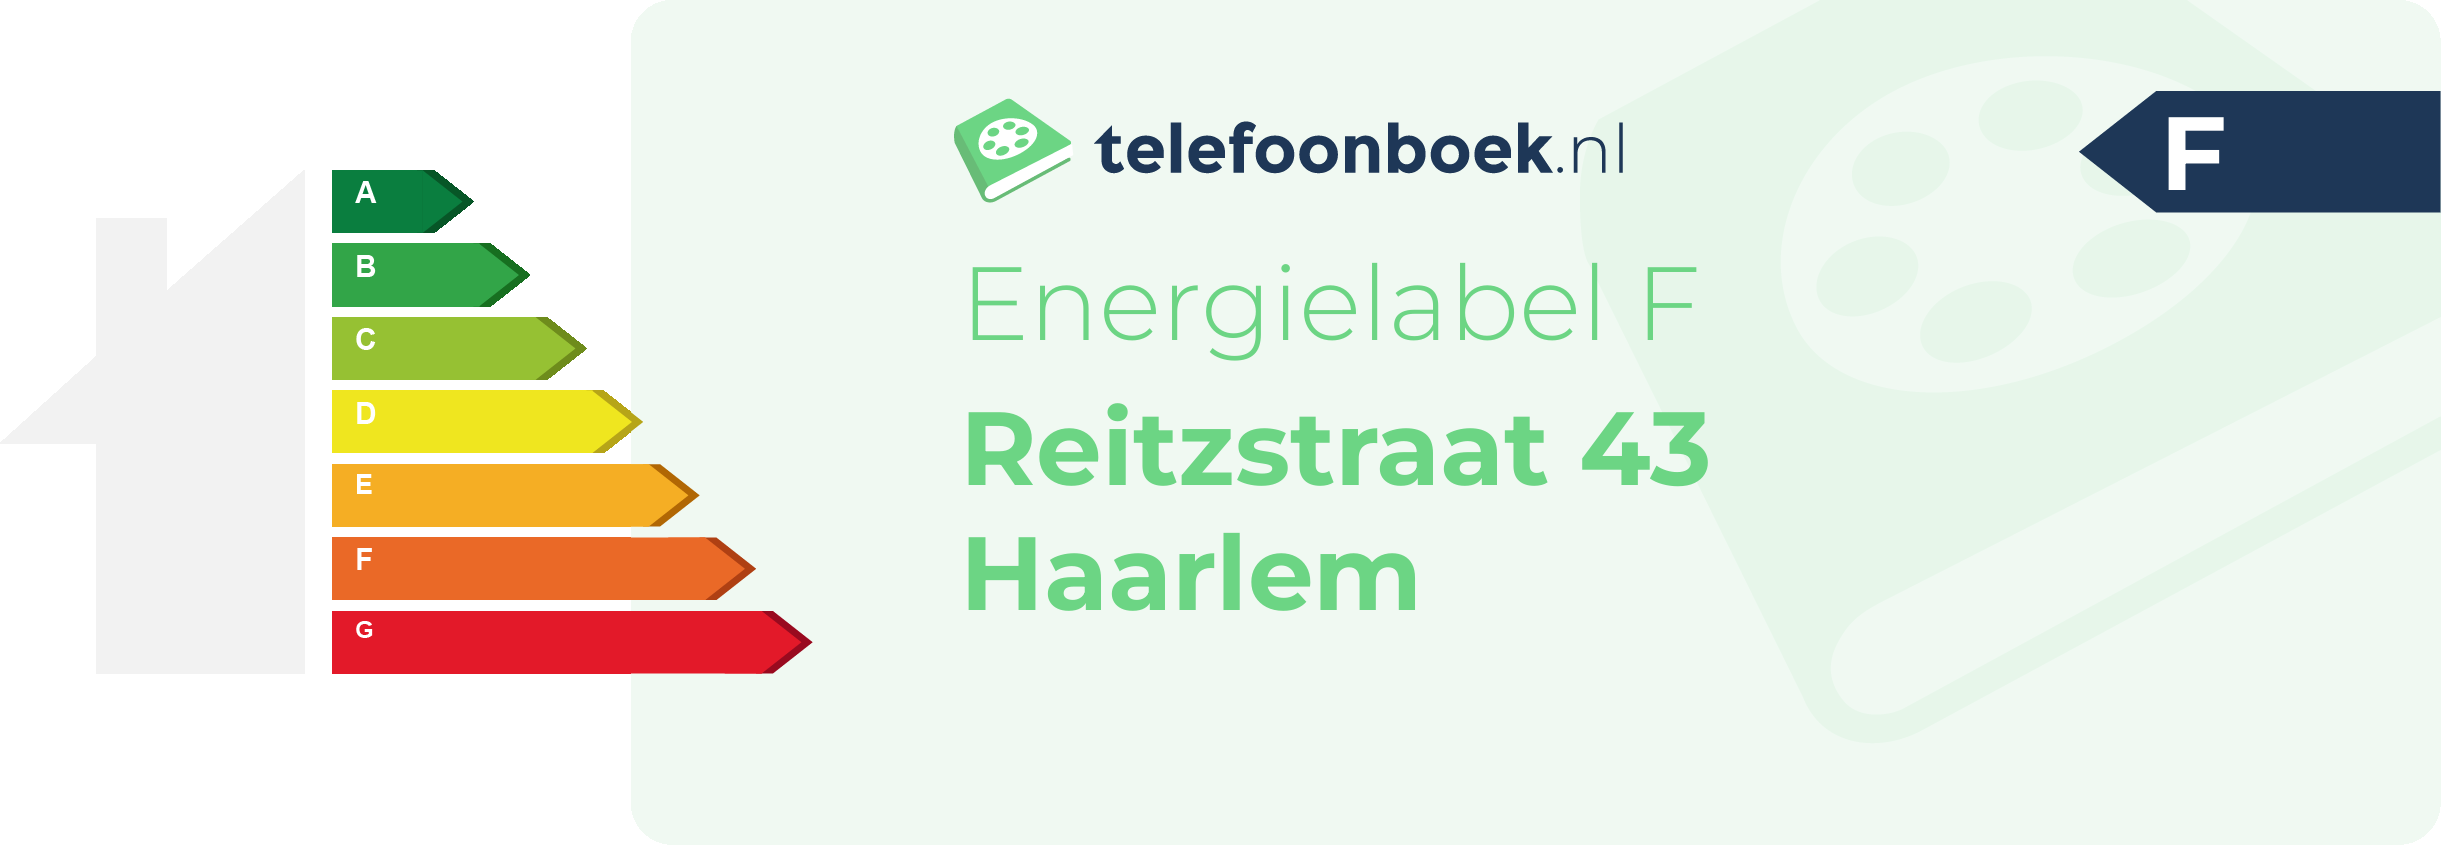 Energielabel Reitzstraat 43 Haarlem